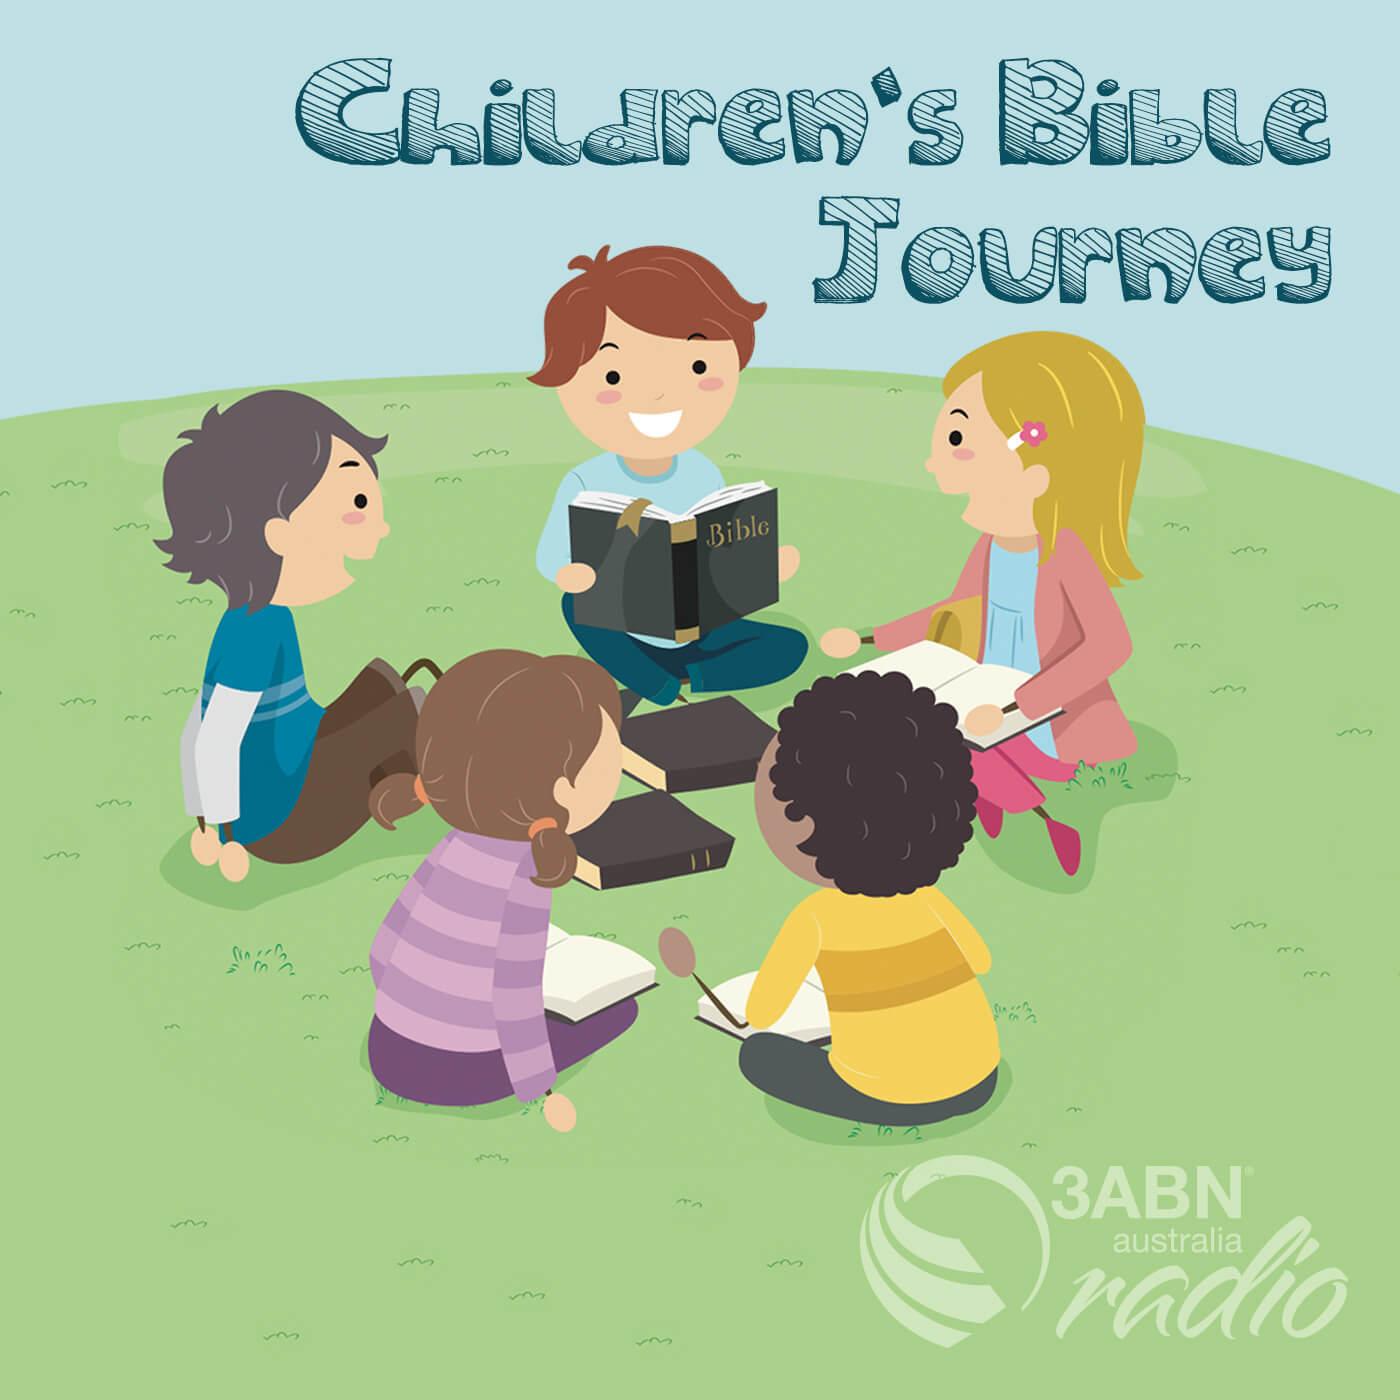 Children's Bible Journey - 2156